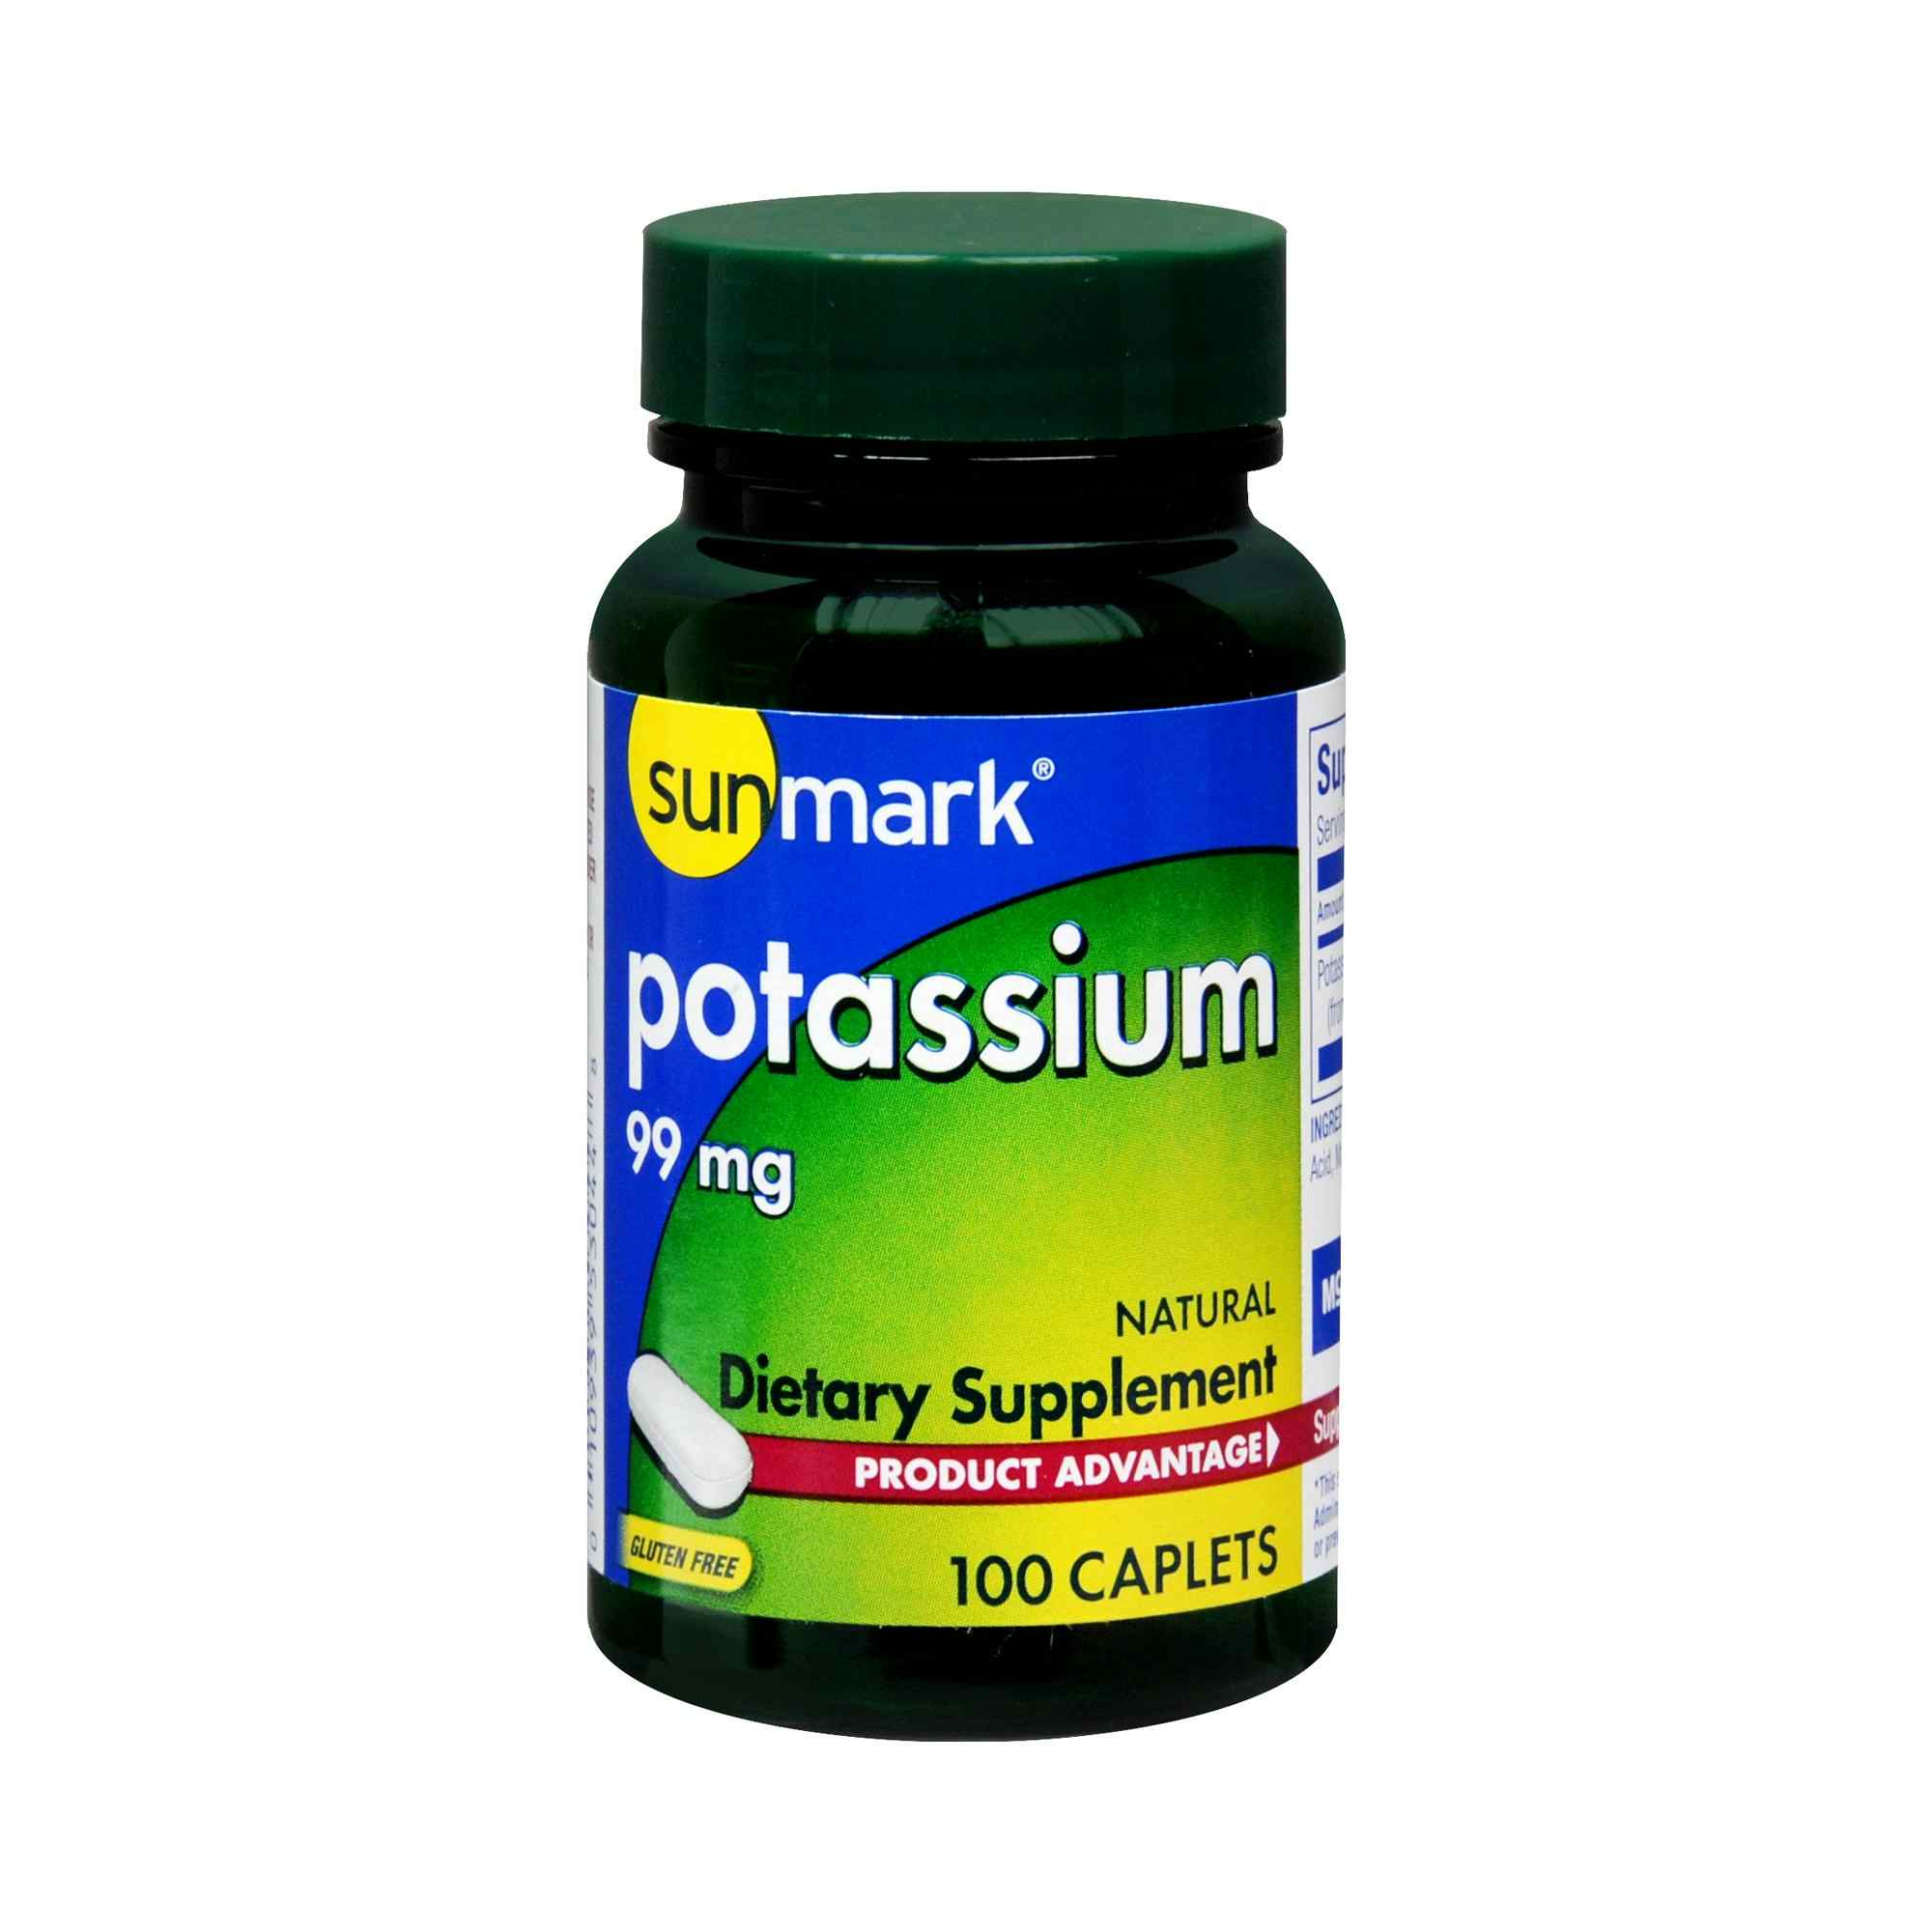 sunmark Potassium Natural Dietary Supplement, 99 mg, 01093989744, 1 Bottle (100 Tablets)